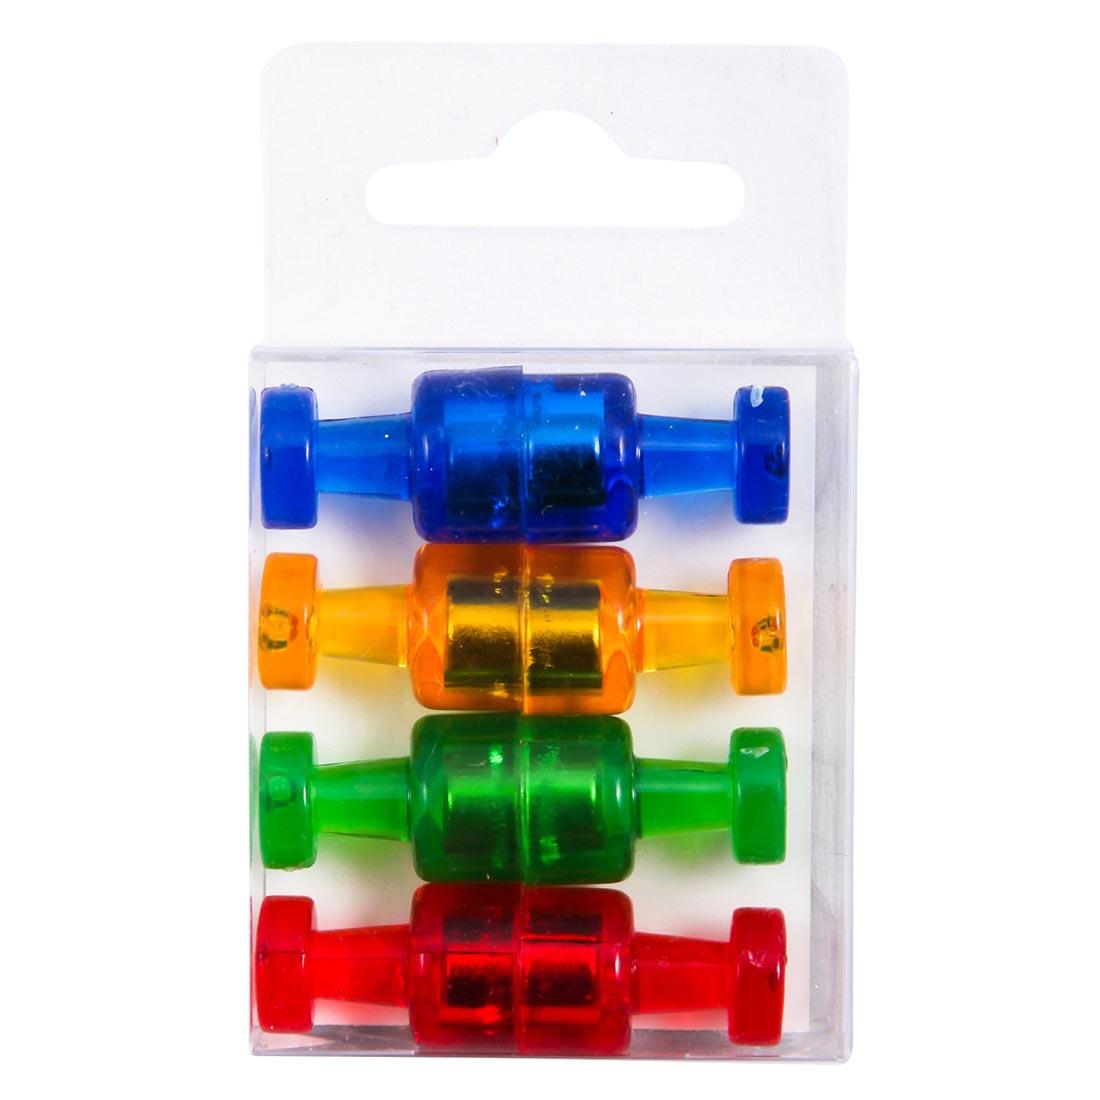 Eight colorful push-pin shaped Kaleidoscope Magnets